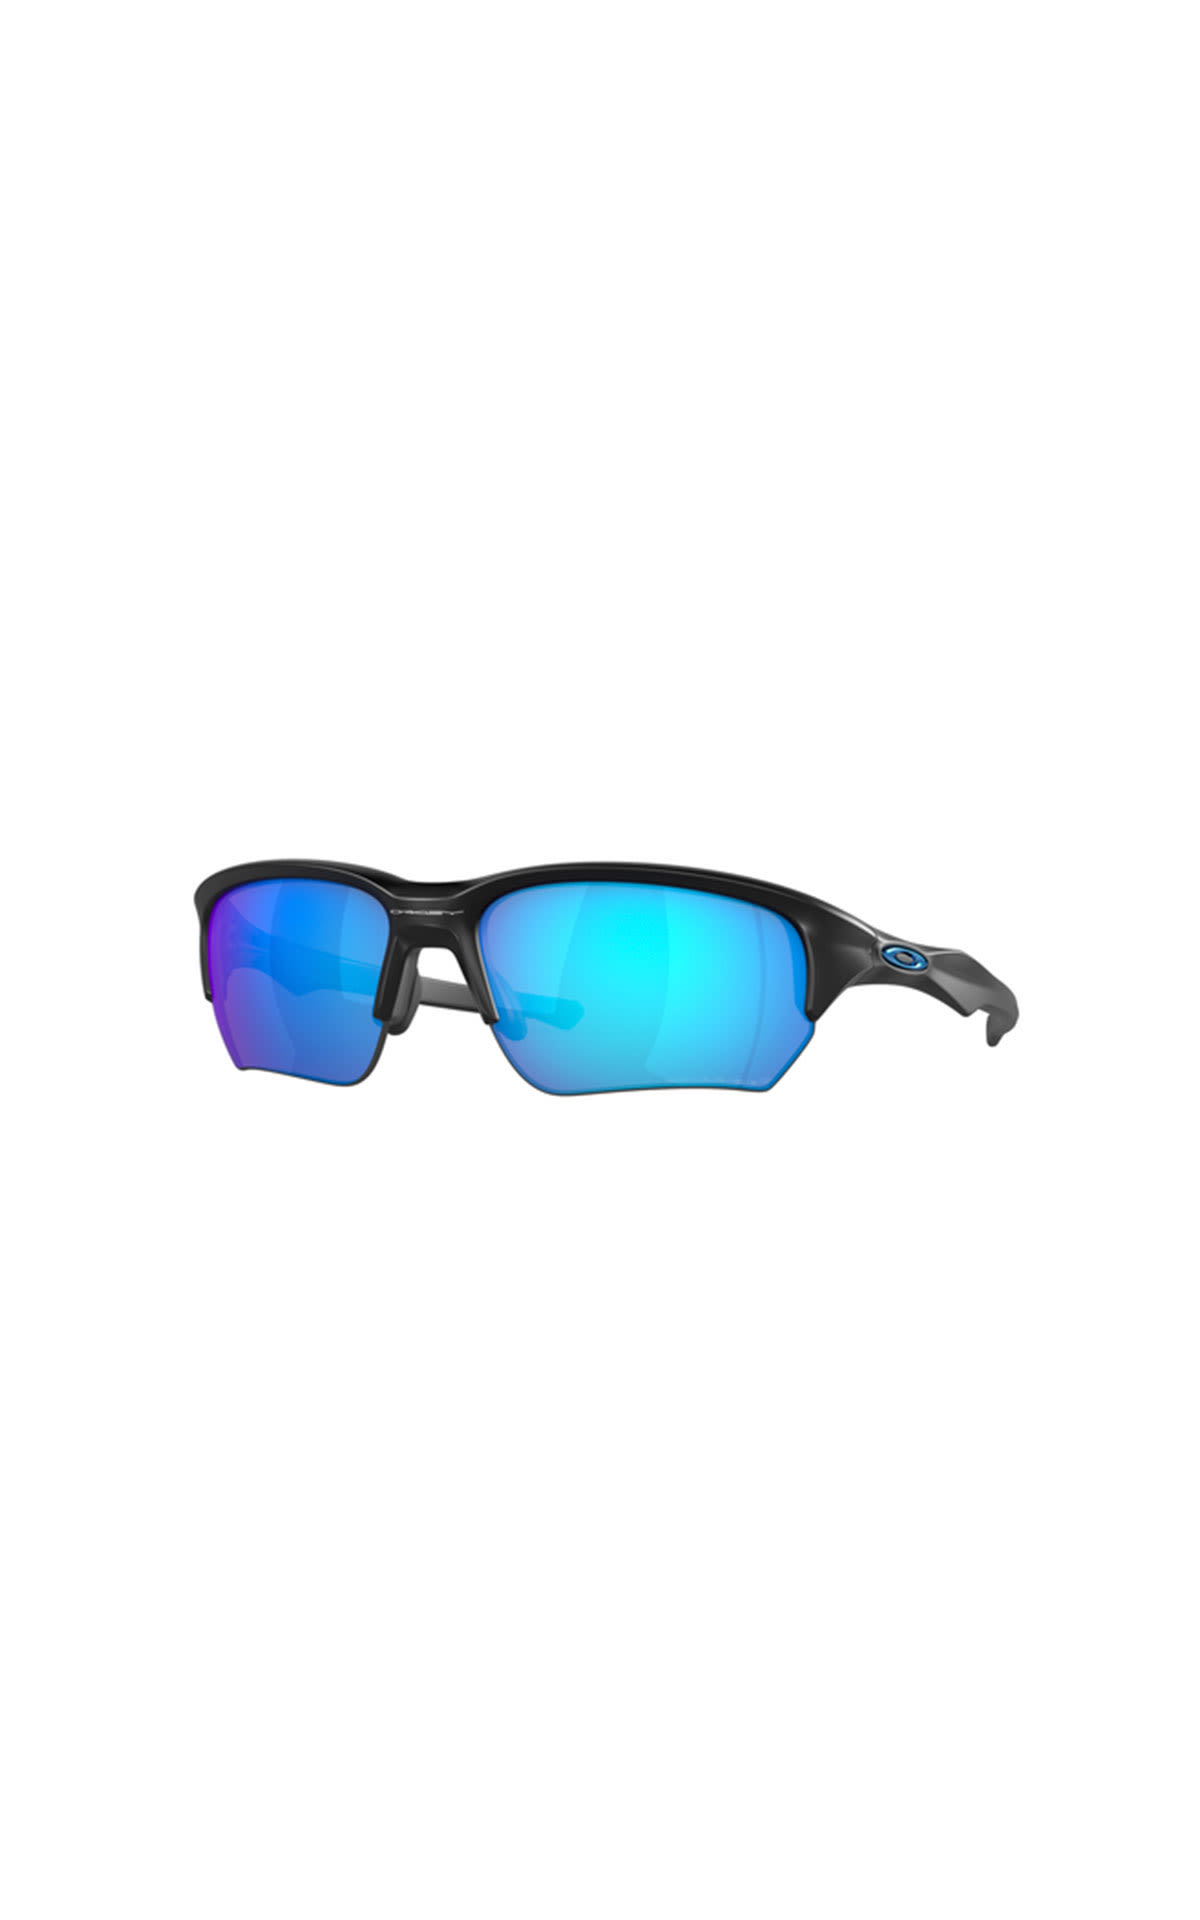 Gafas de sol Oakley con cristales azules  Sunglass Hut